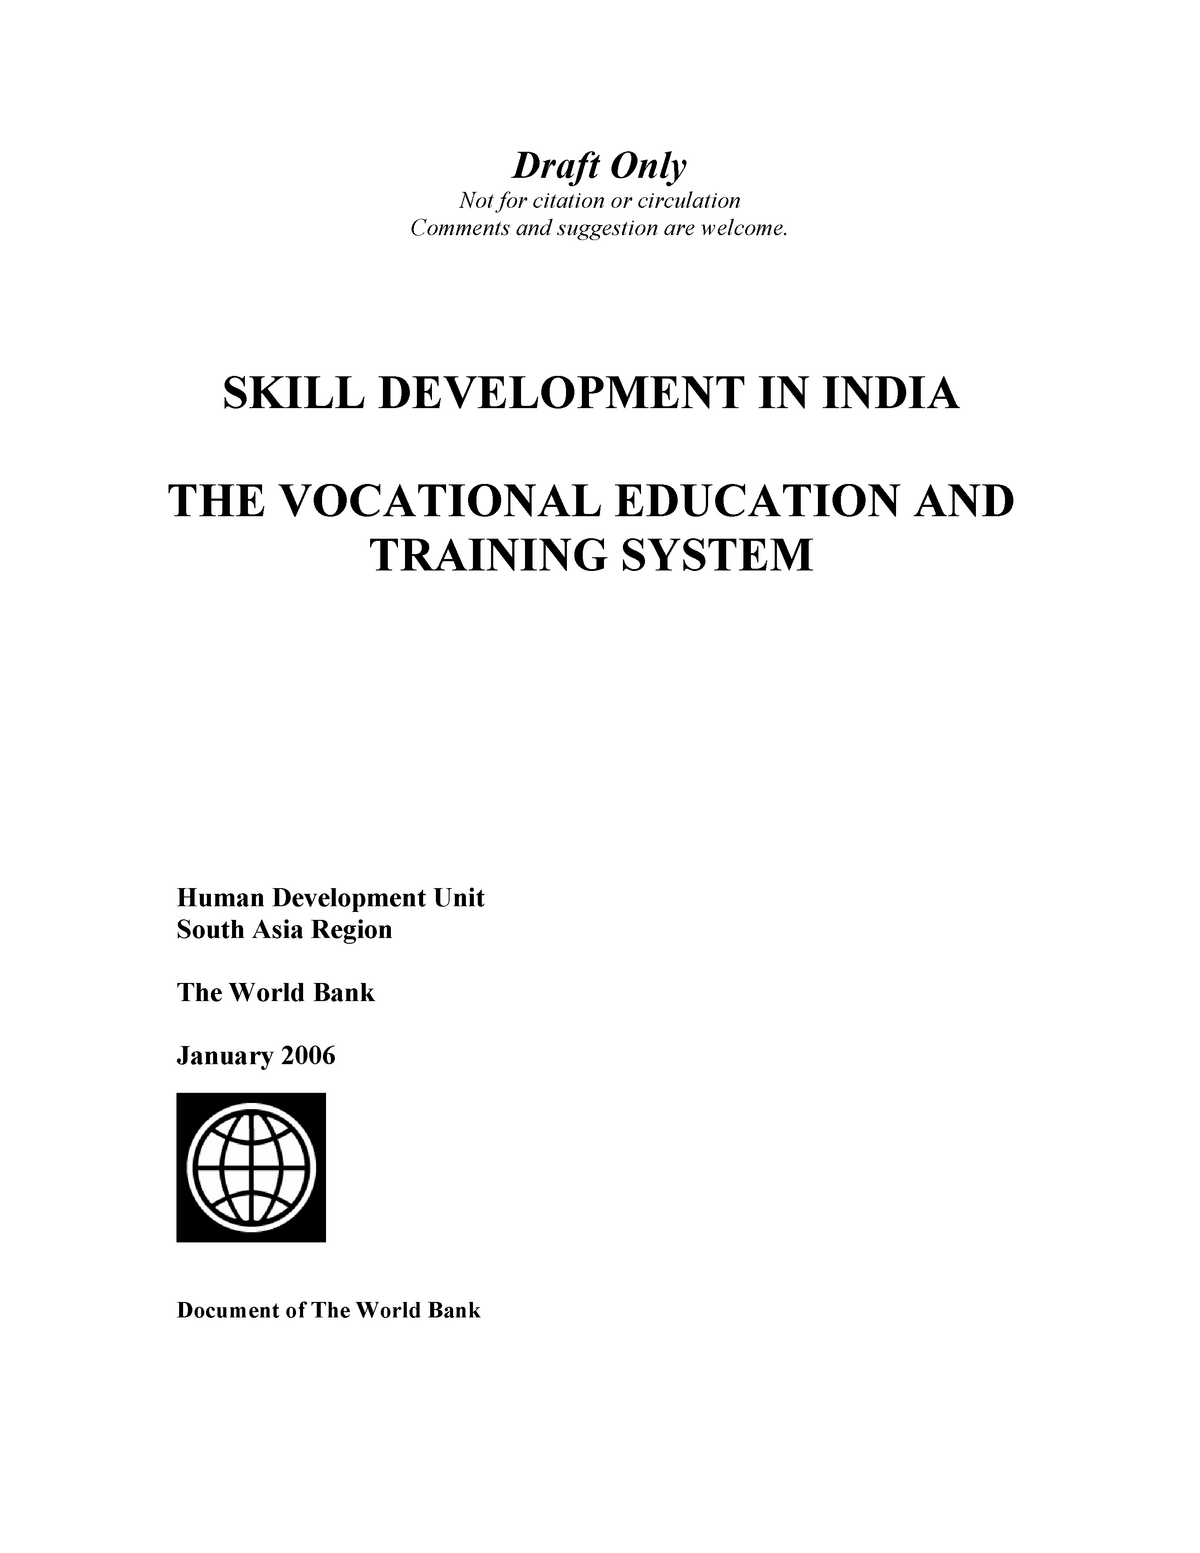 essay on skill development in india